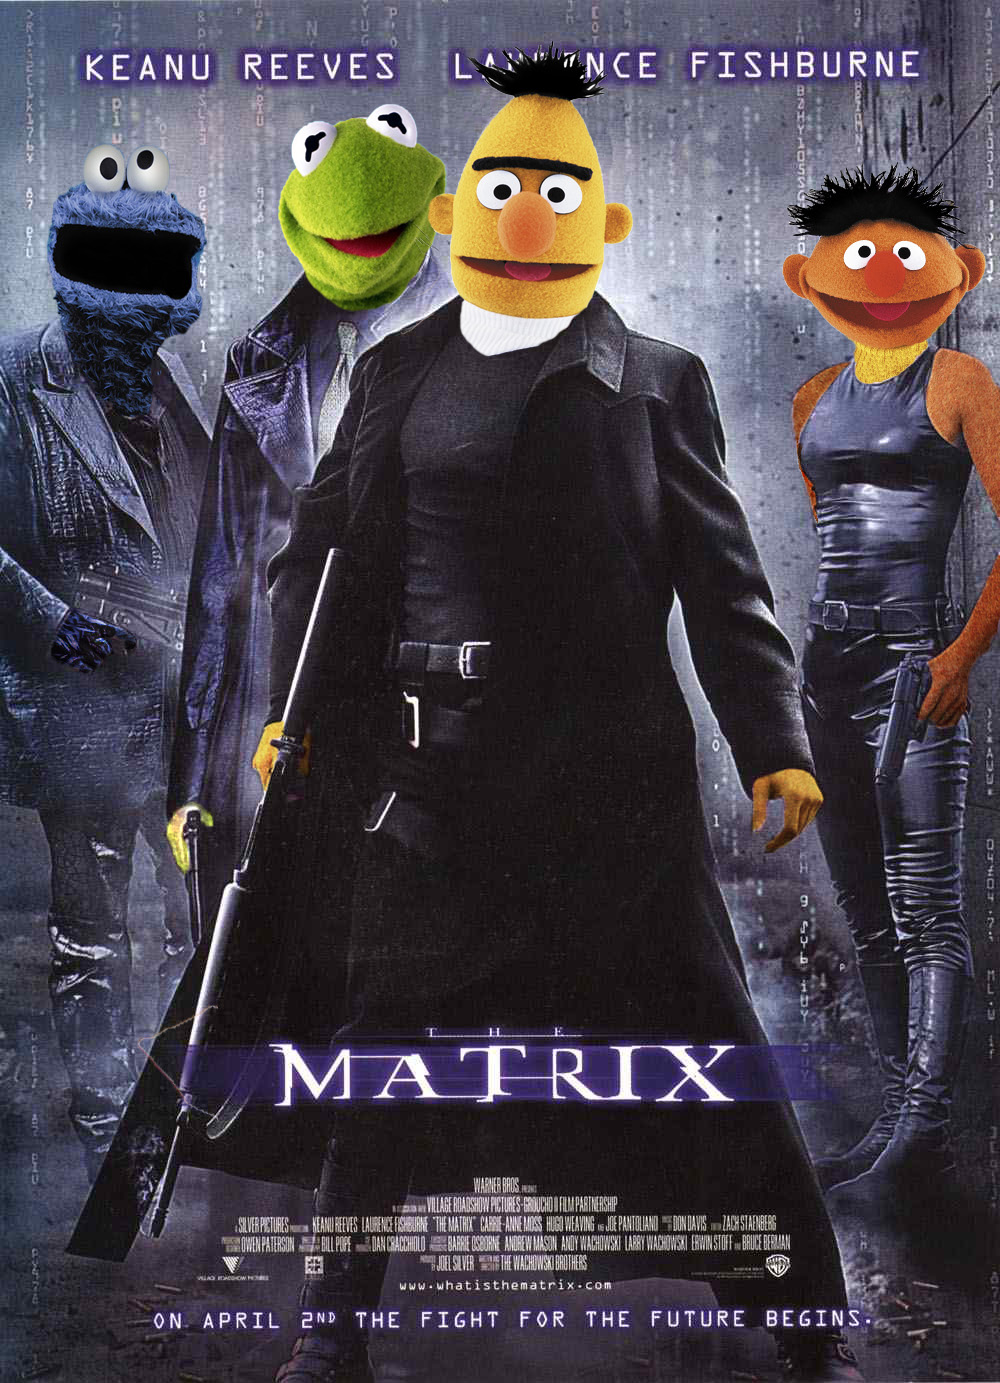 Sesame Street meets The Matrix 